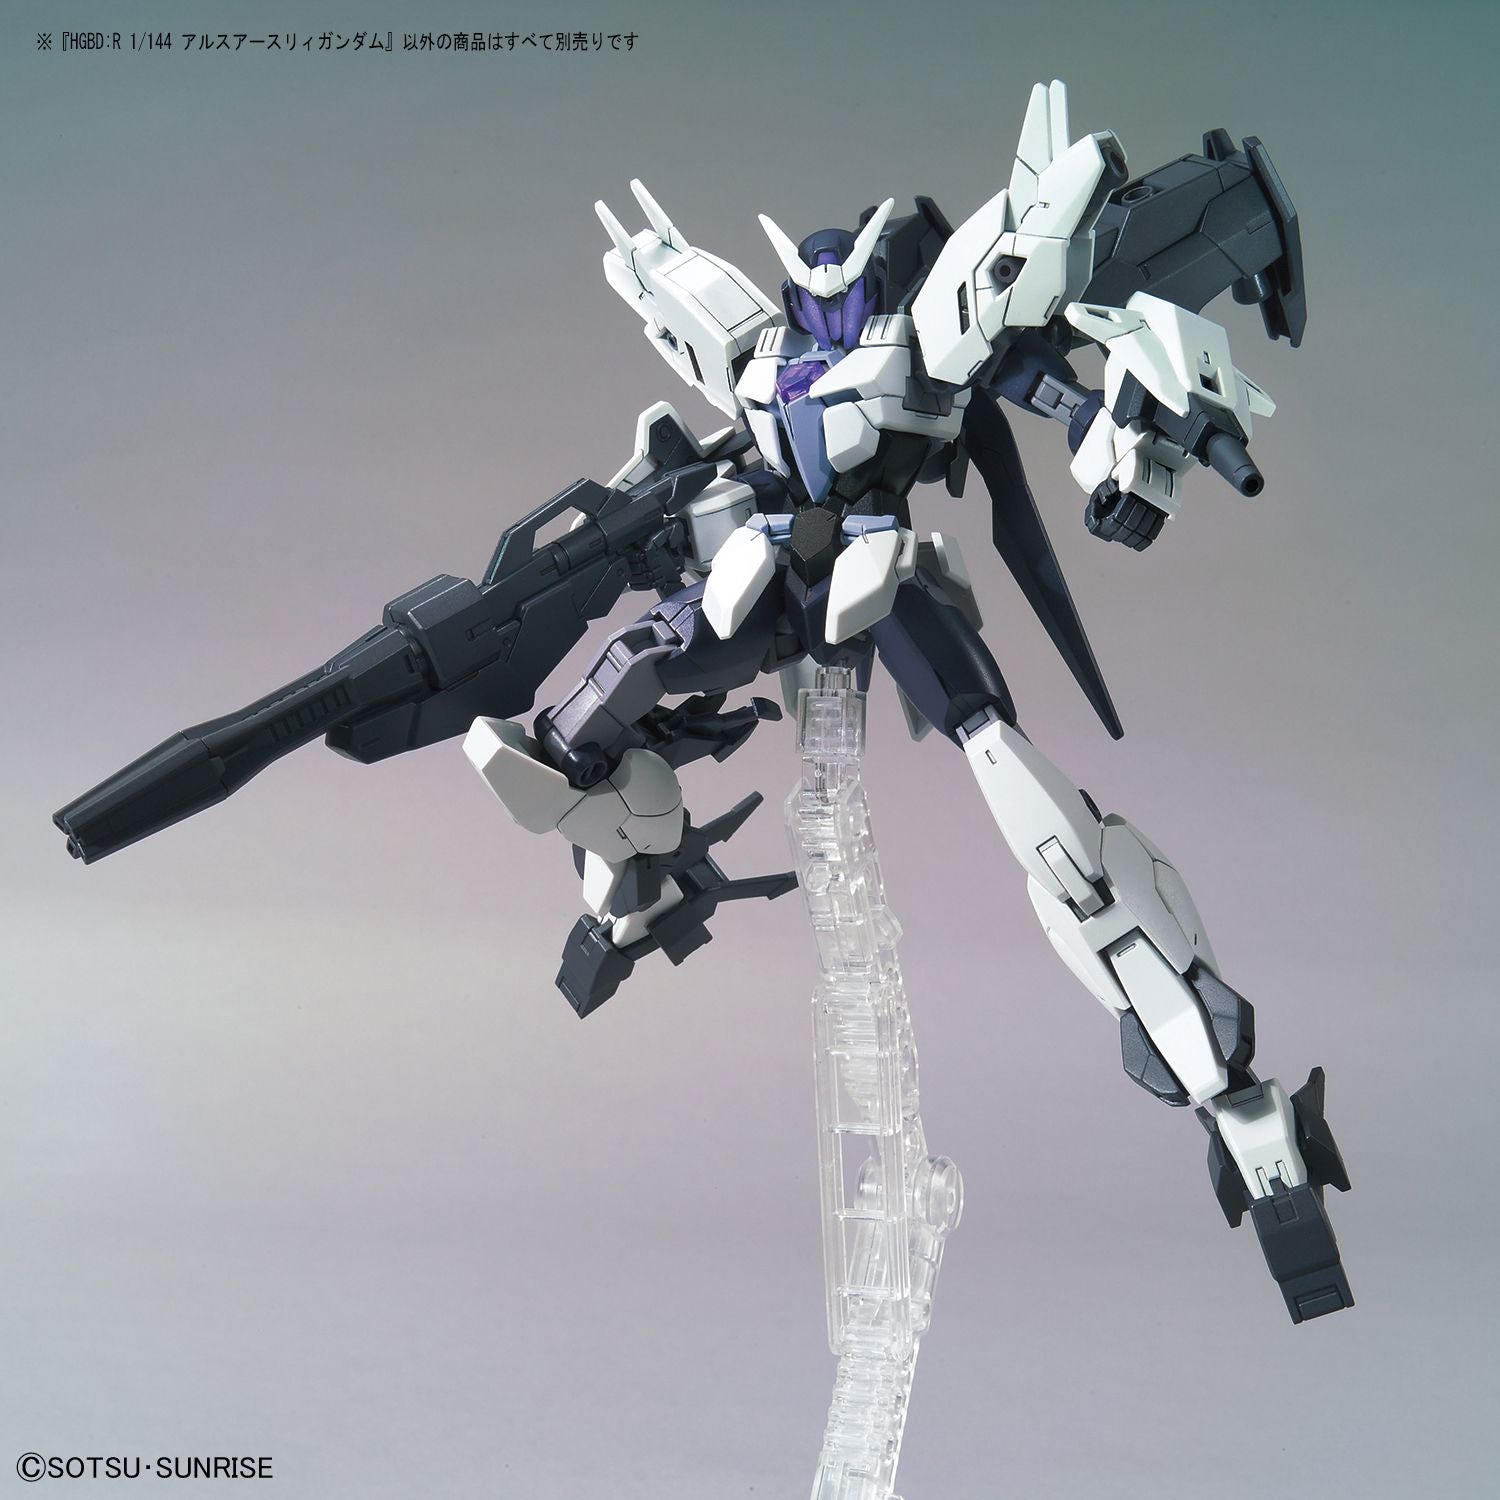 HGBD:R 1/144 Alus Earthree Gundam - High Grade Gundam Build Divers Re:RISE | Glacier Hobbies